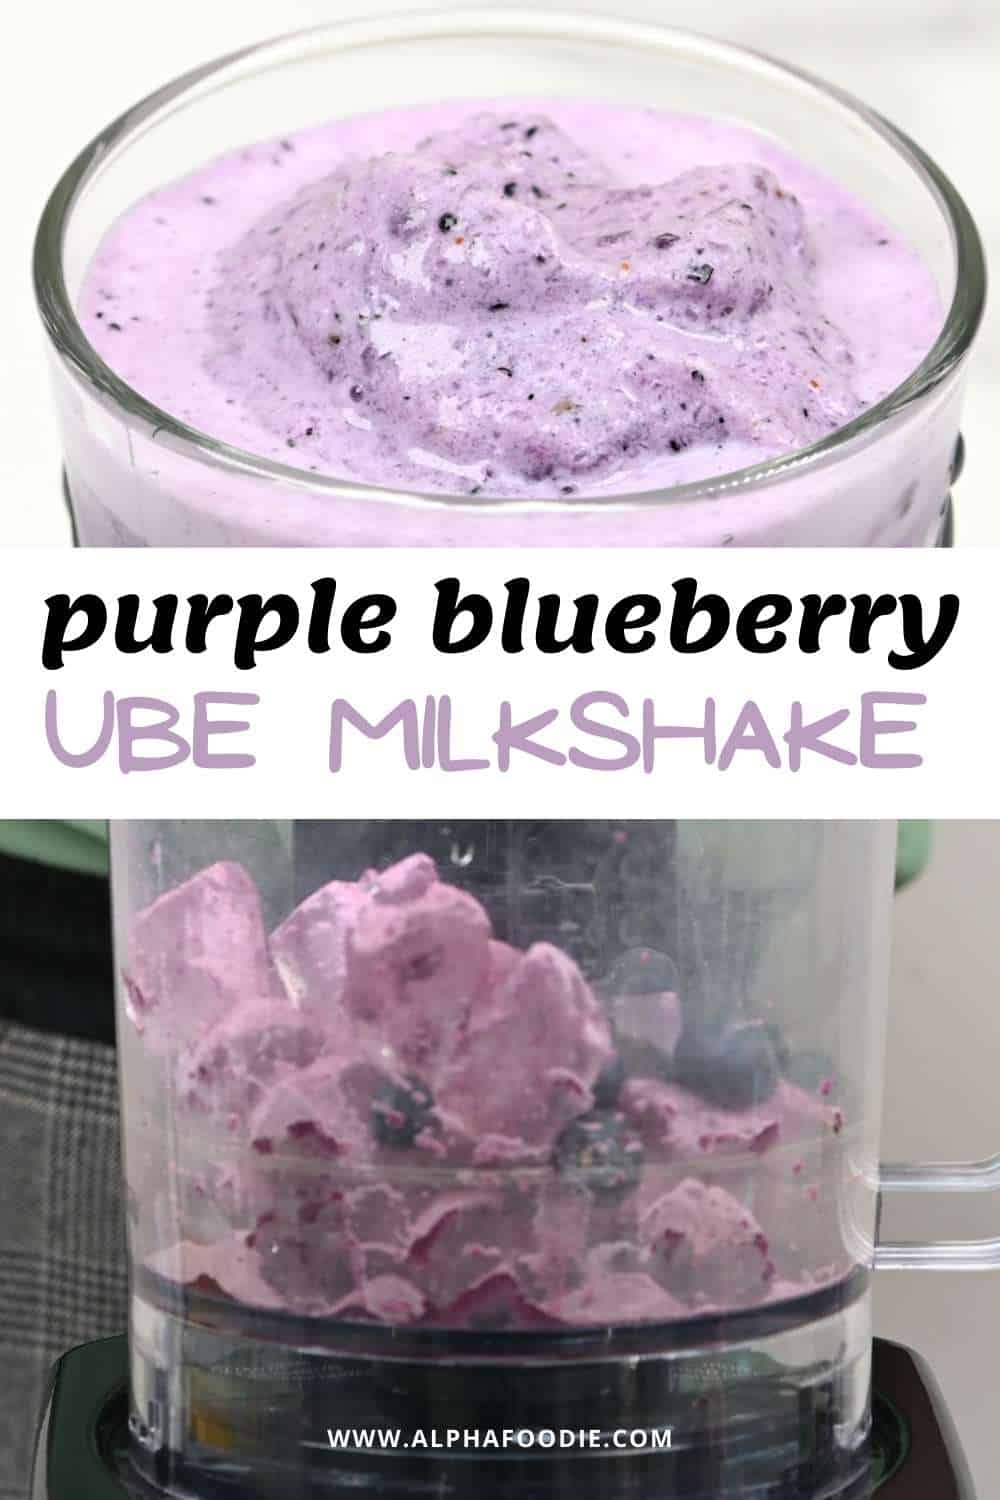 Healthy Blueberry Milkshake (Ube Blueberry Frappuccino) - Alphafoodie